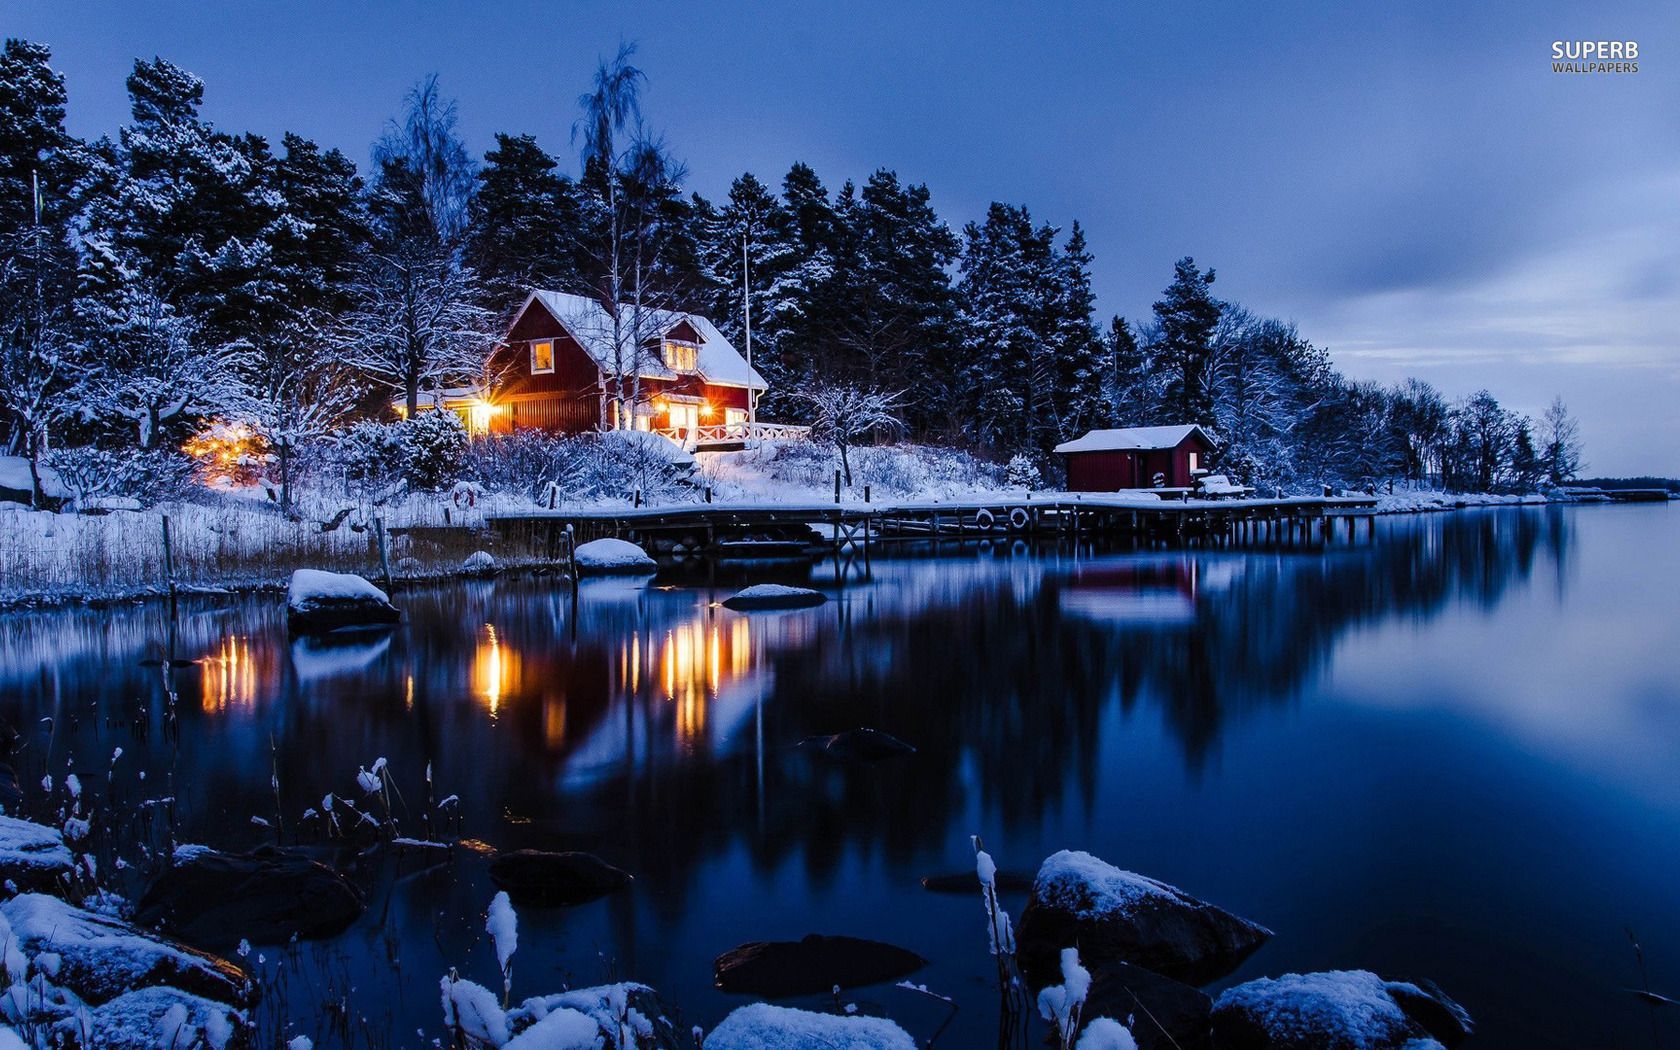 Lakeside winter cabin wallpaper. Winter cabin, Winter landscape, Landscape wallpaper